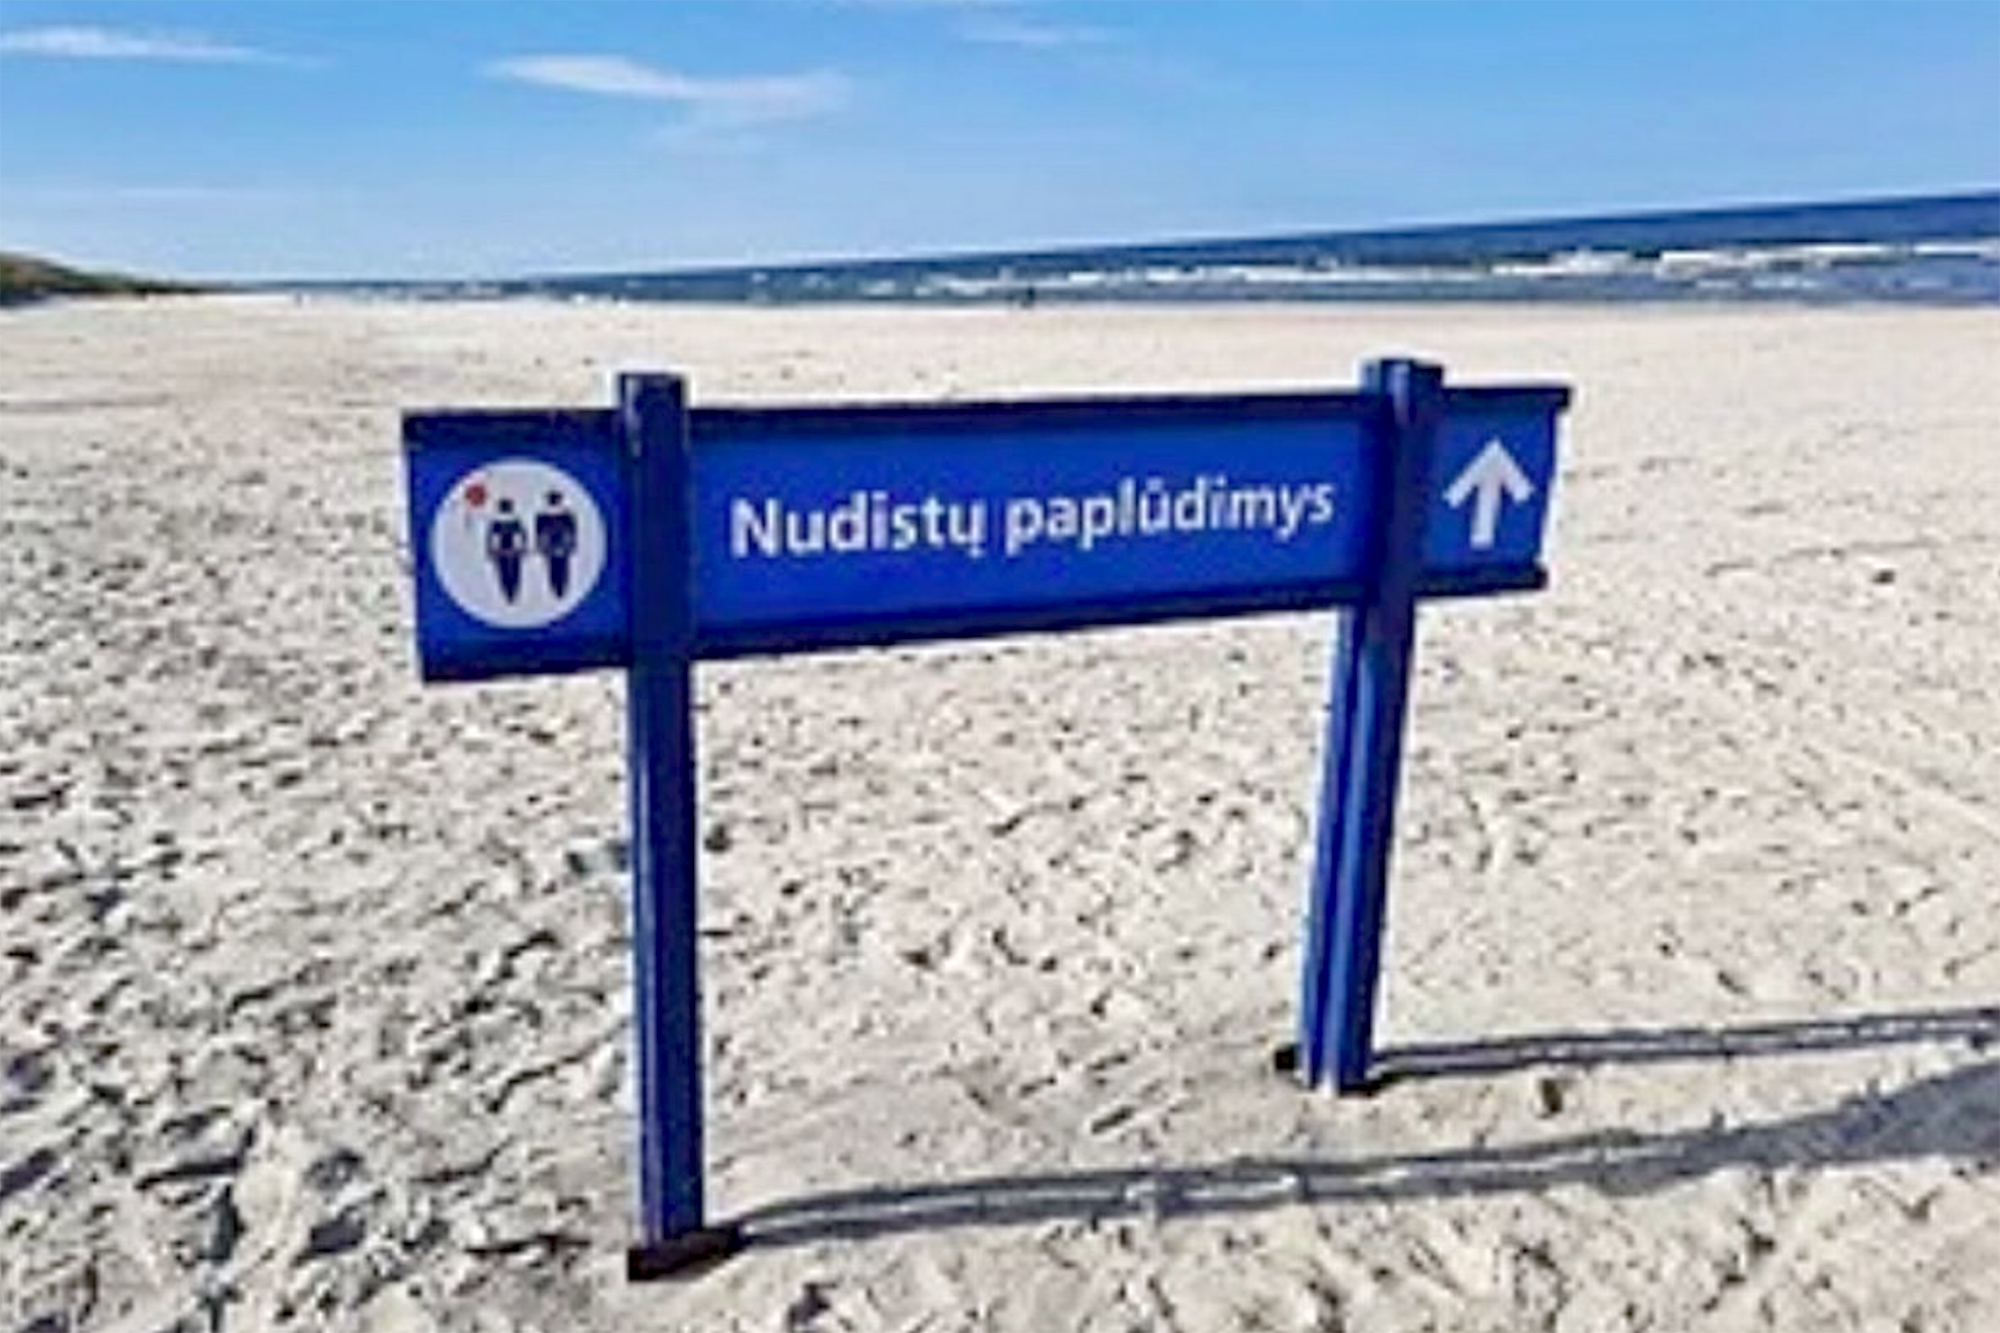 becky belanger share masterbating on nude beach photos